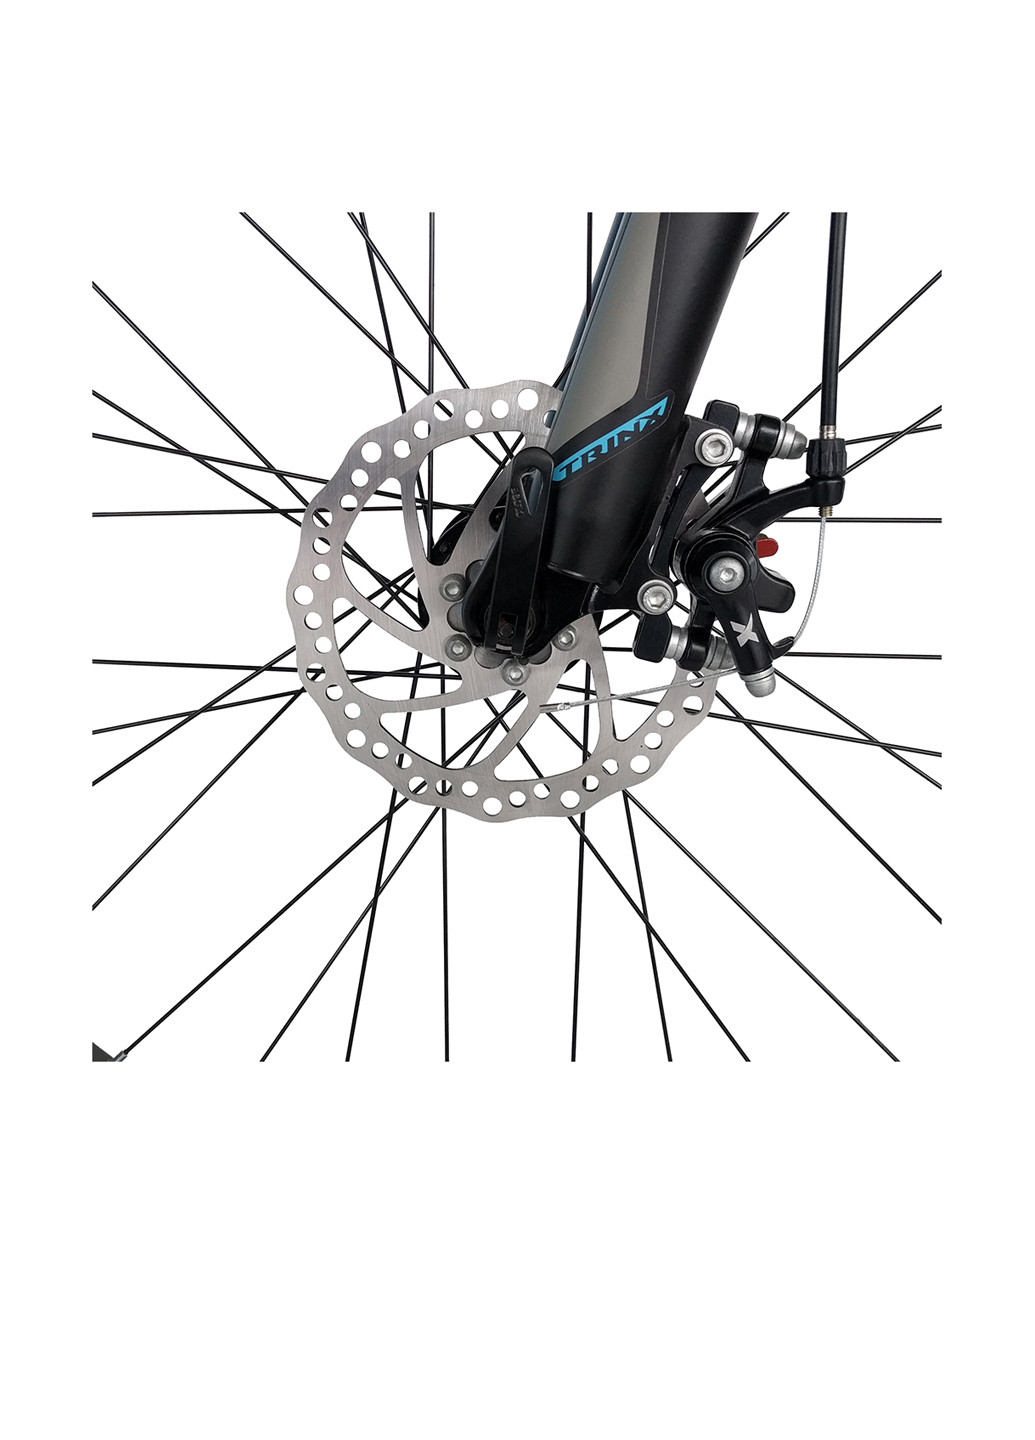 Велосипед Trinx m136elite 27.5"x21" matt-black-grey-red (146489474)